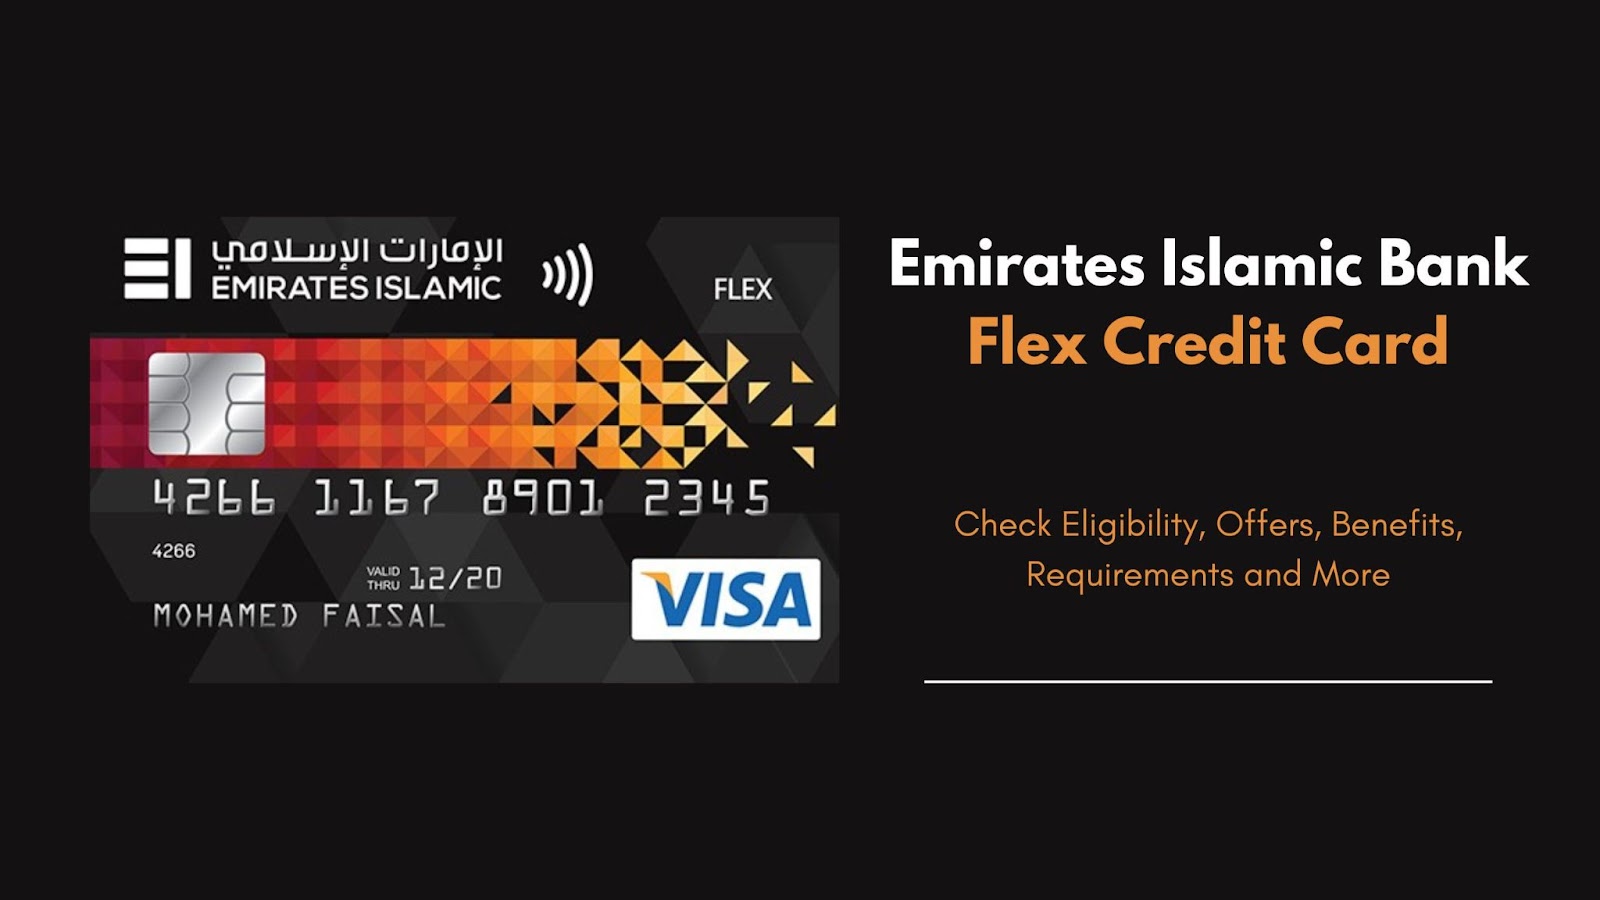 Emirates Islamic Bank Flex Credit Card